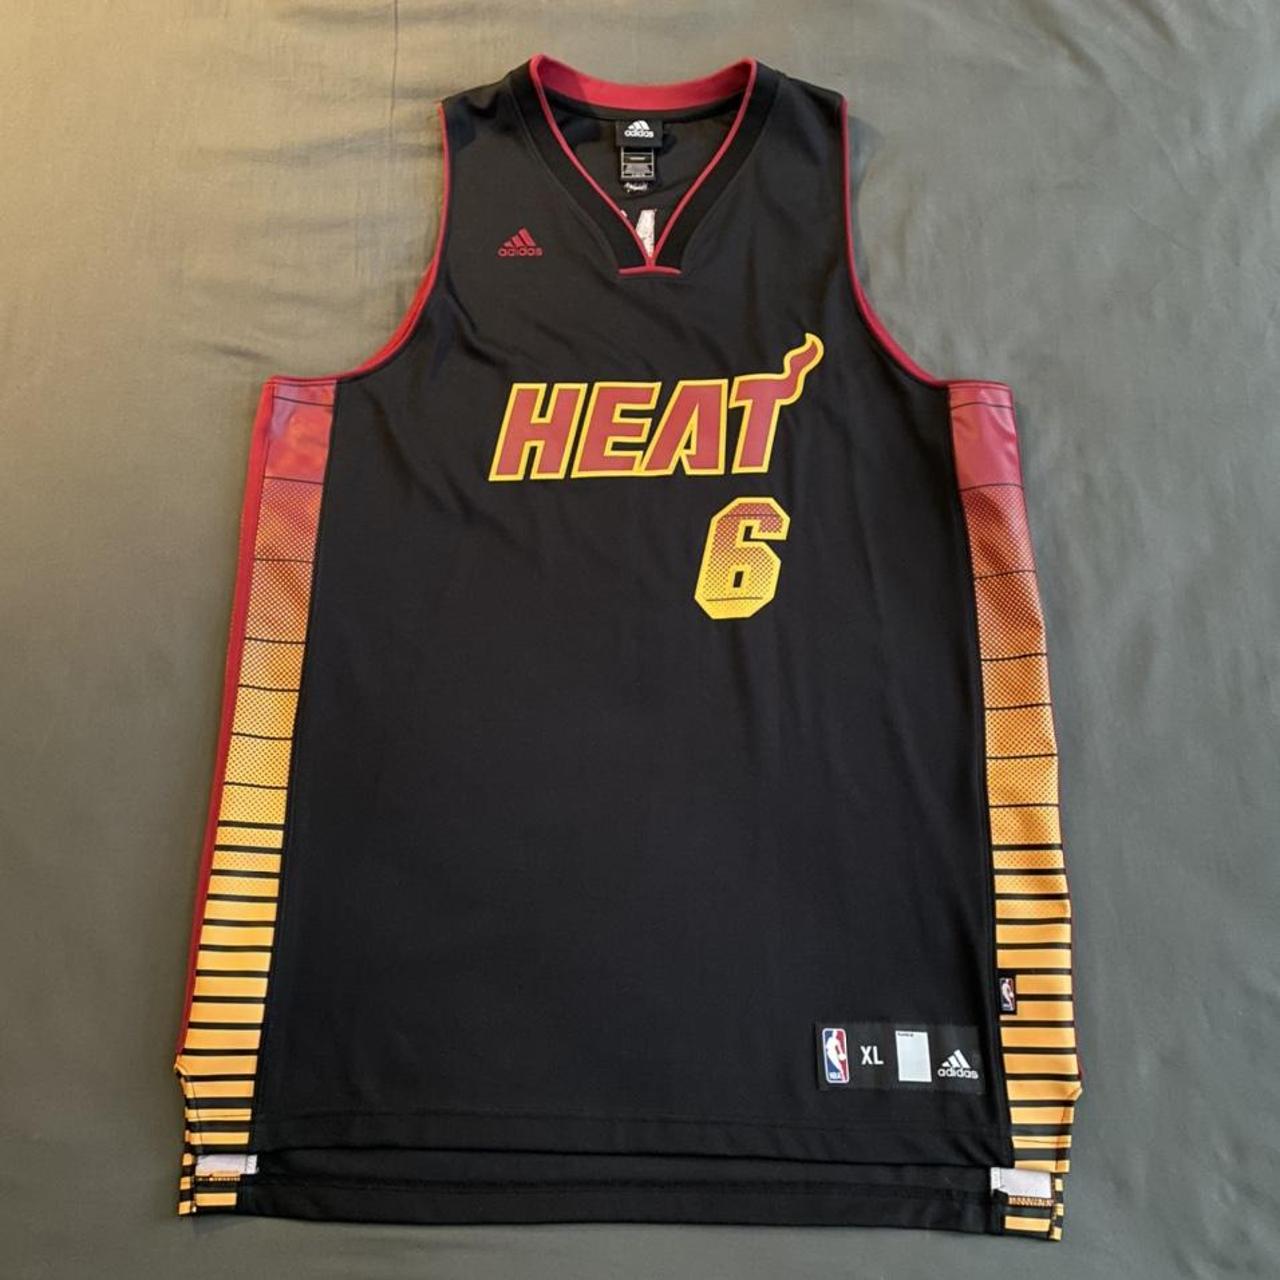 Adidas Miami Heat Basketball Shirt Jersey All Sizes Black Red New